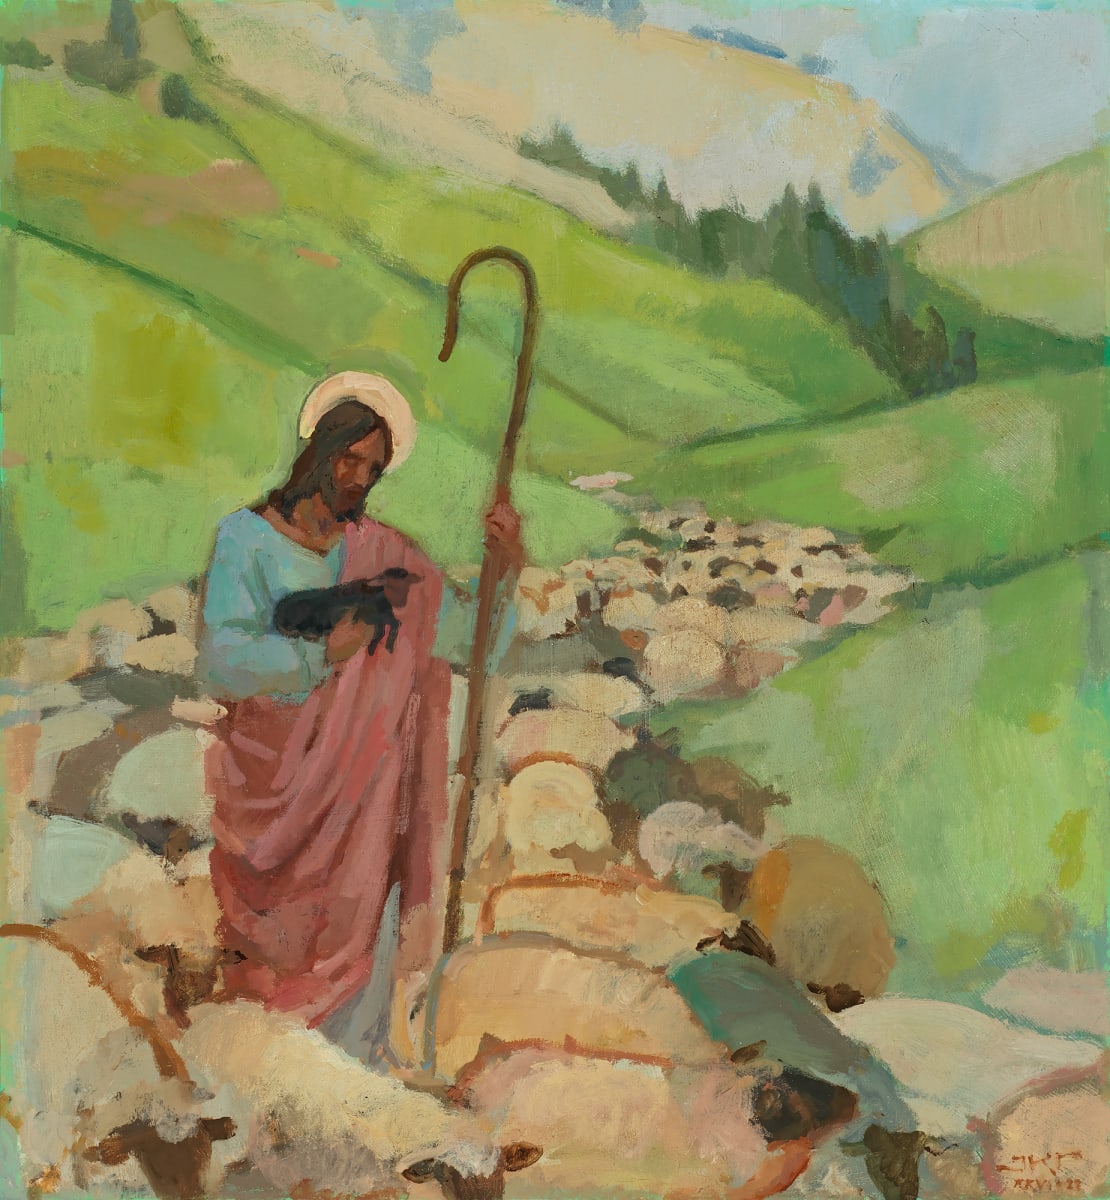 Good Shepherd by J. Kirk Richards  Image: The Good Shepherd with his flock in a summer field. 